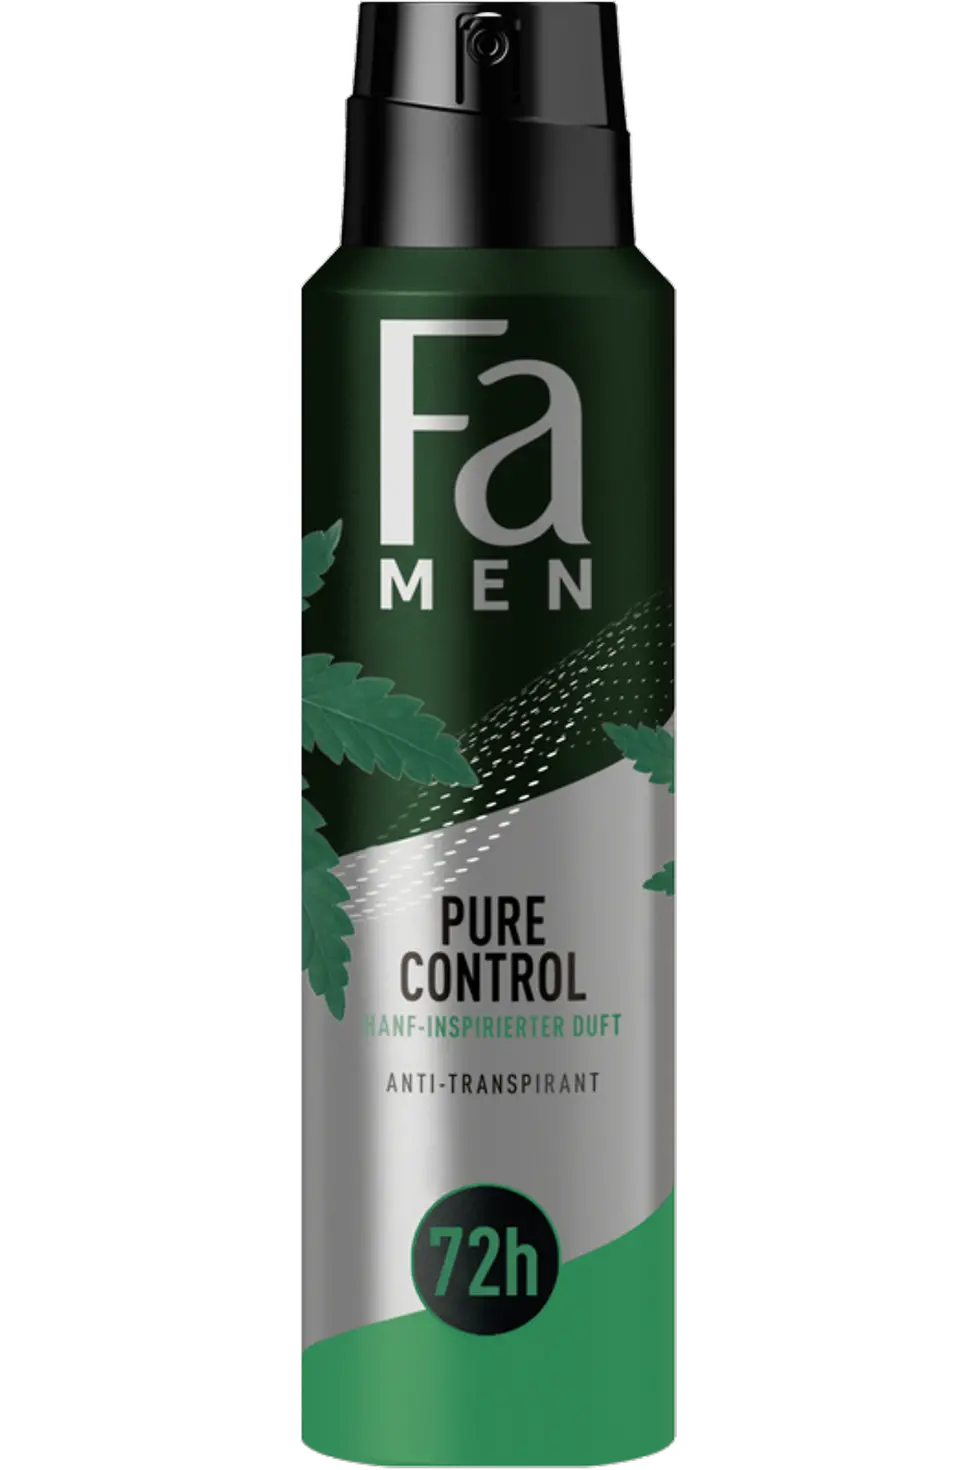 Fa Men Pure Control, Antitranspirant